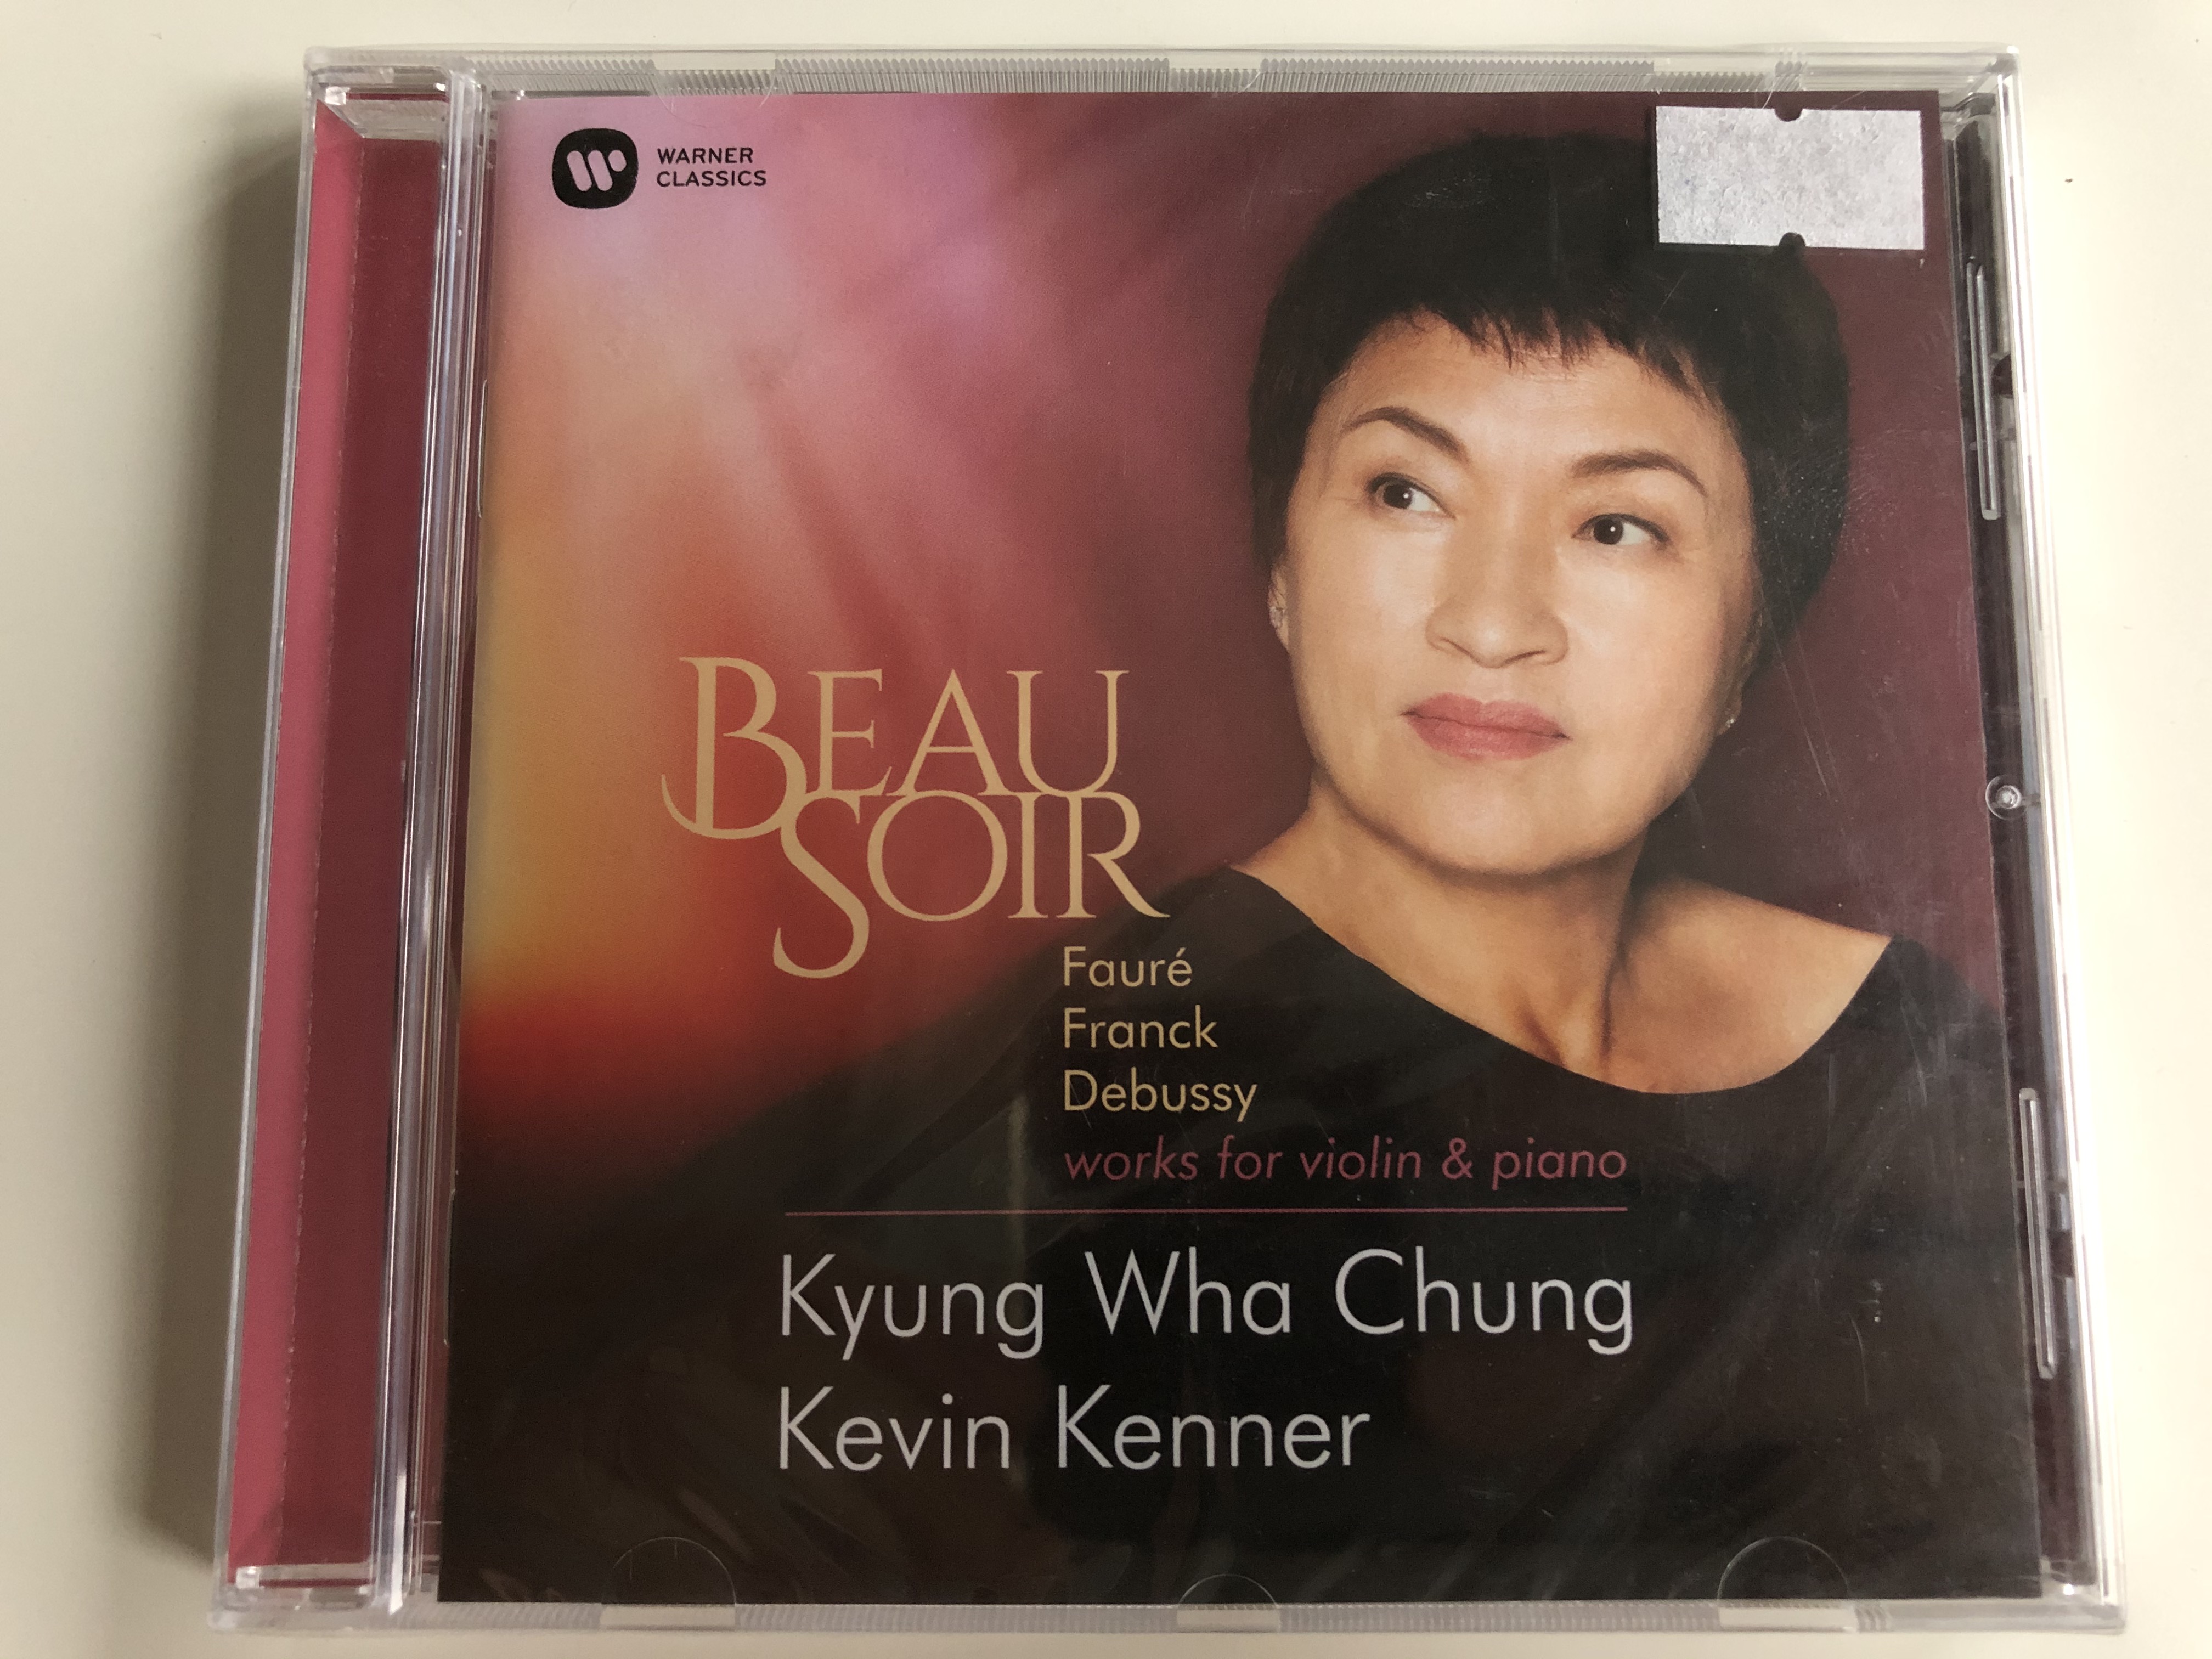 beau-soir-faur-franck-debussy-works-for-violin-piano-kyung-wha-chung-kevin-kenner-warner-classics-audio-cd-2018-stereo-0190295708085-1-.jpg